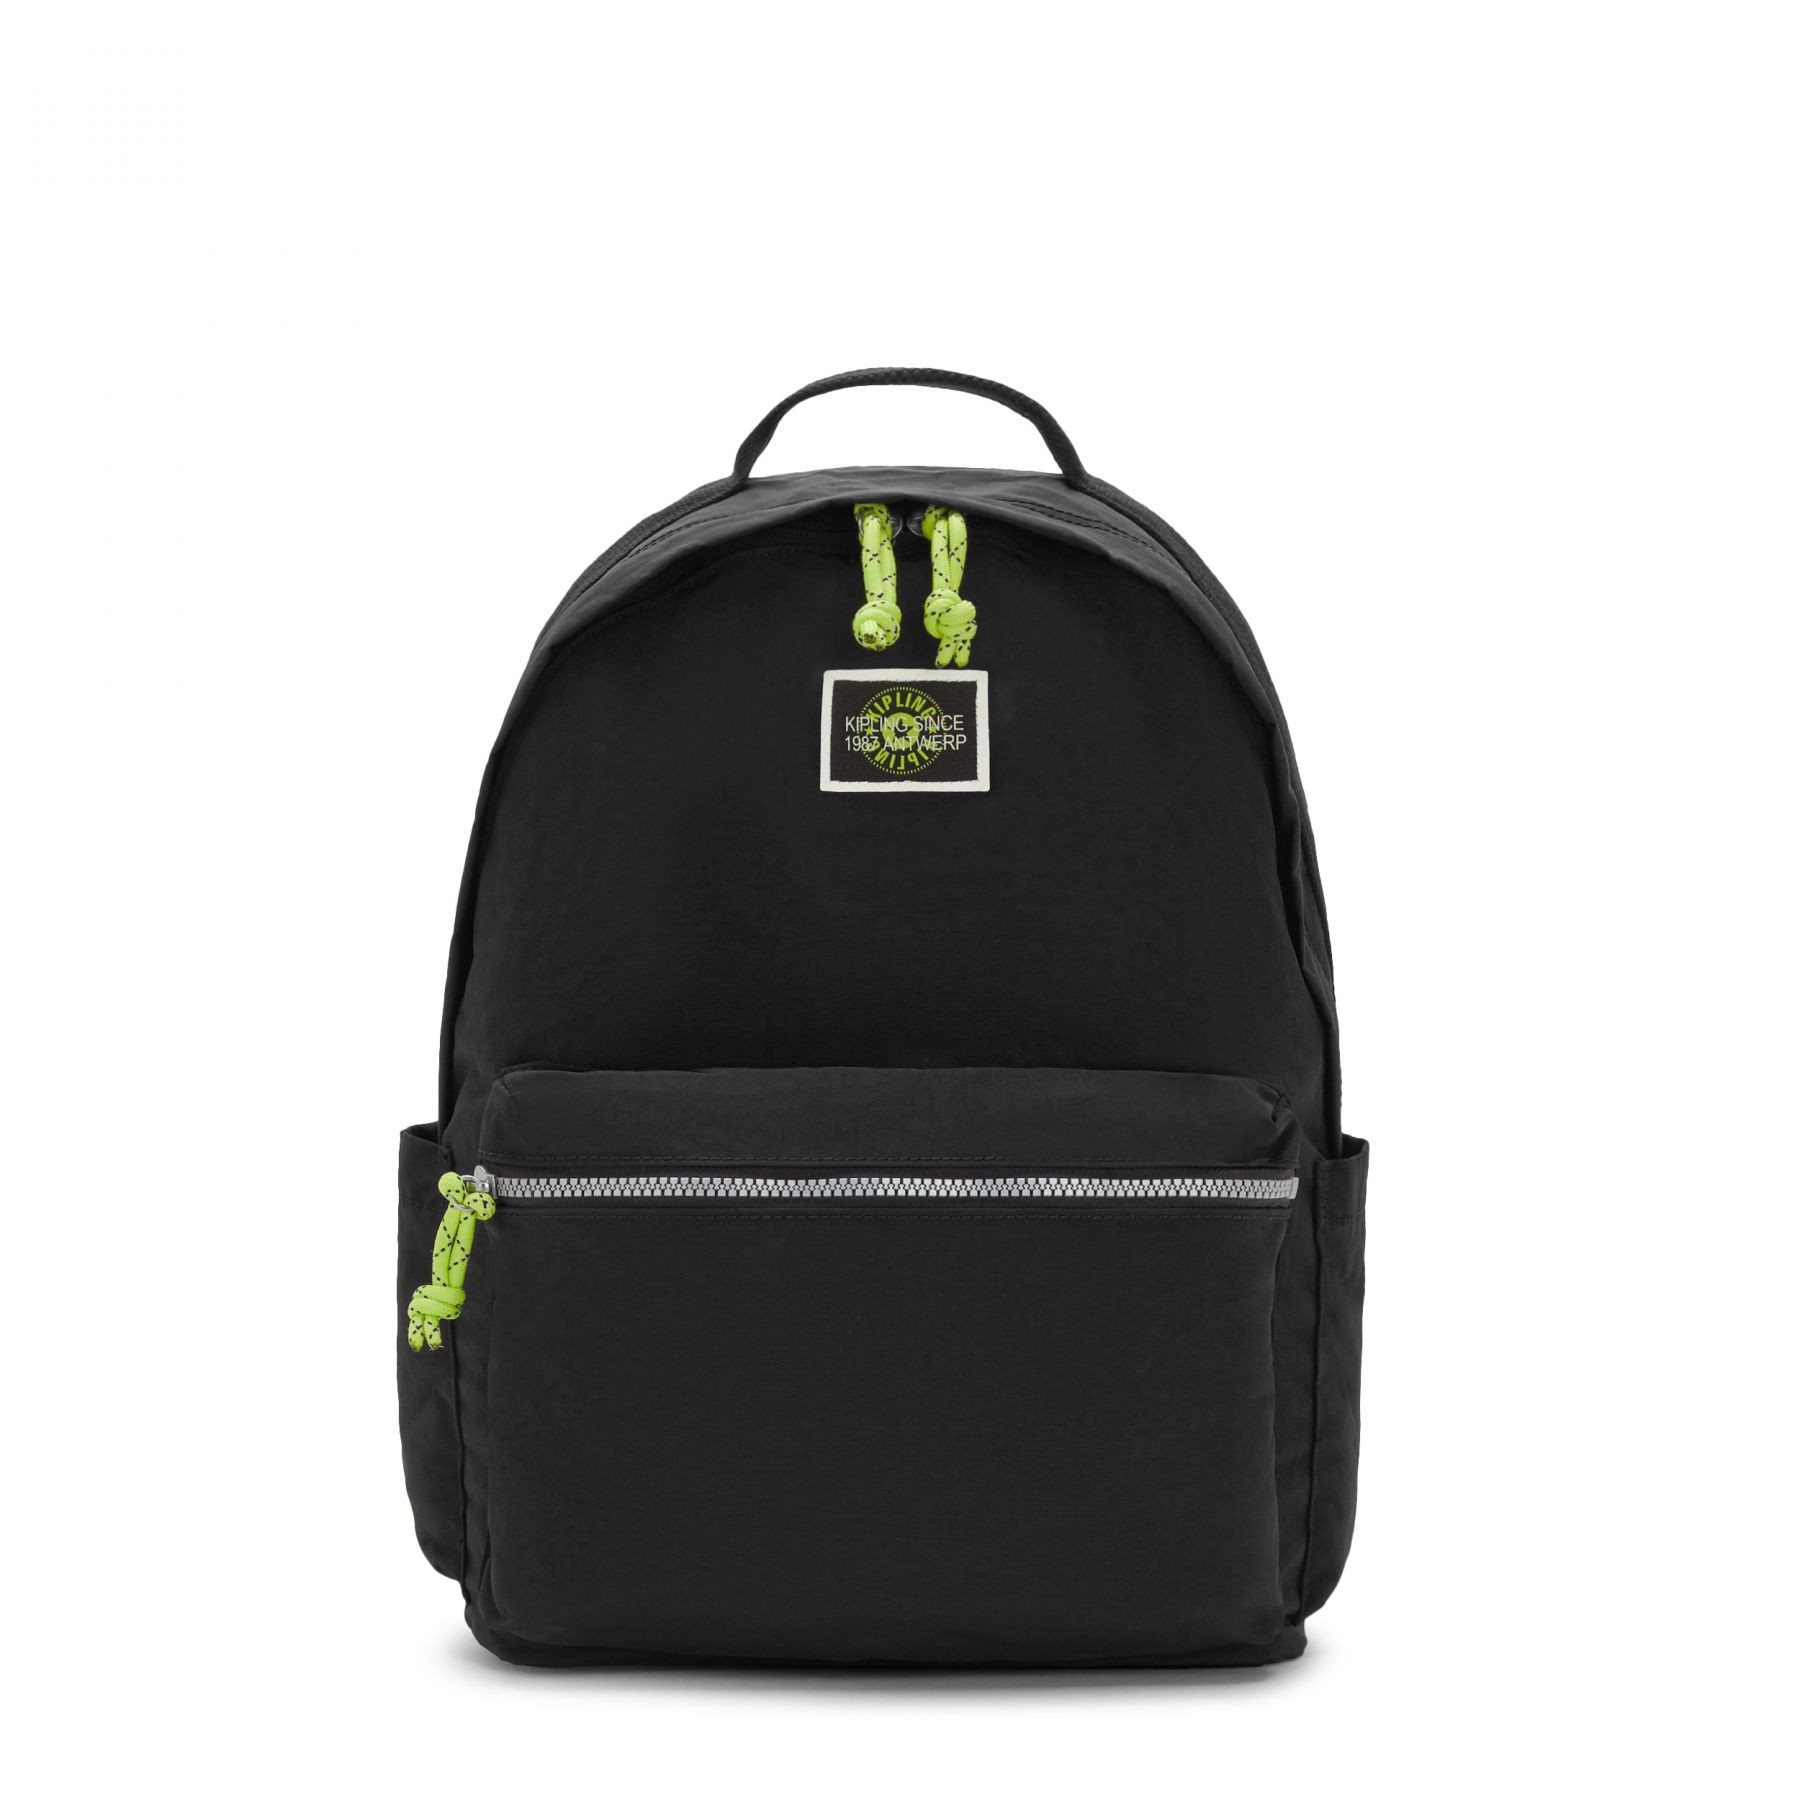 Backpack Damien L Valley Black - KIPLING